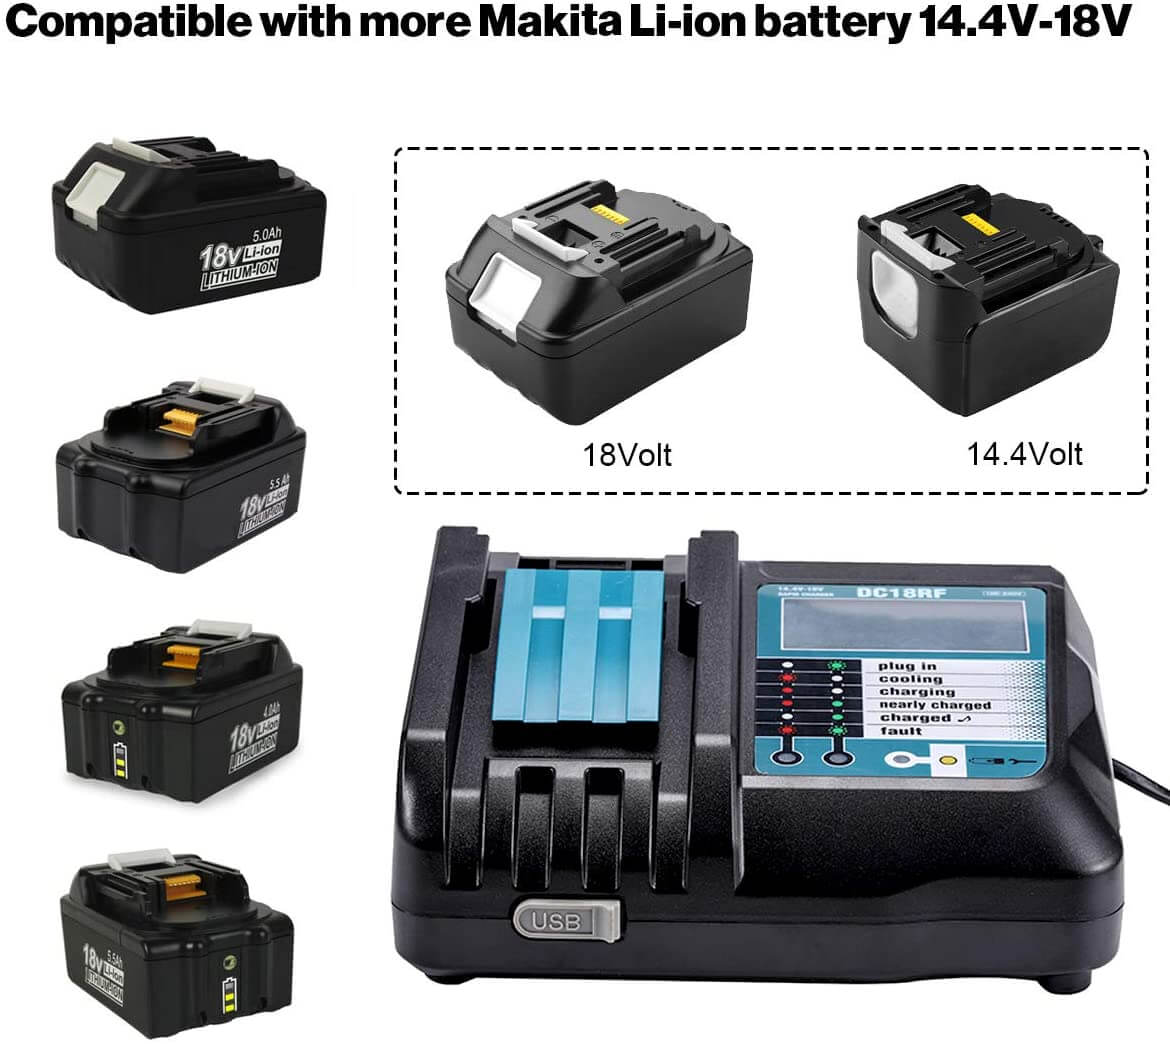 2BL1860B 6.5A+DC18RF 3.5A Li-Ion Ersatz Ladegerät für Makita 14.4V-18V akku Ladegeräte - Dasbatteries